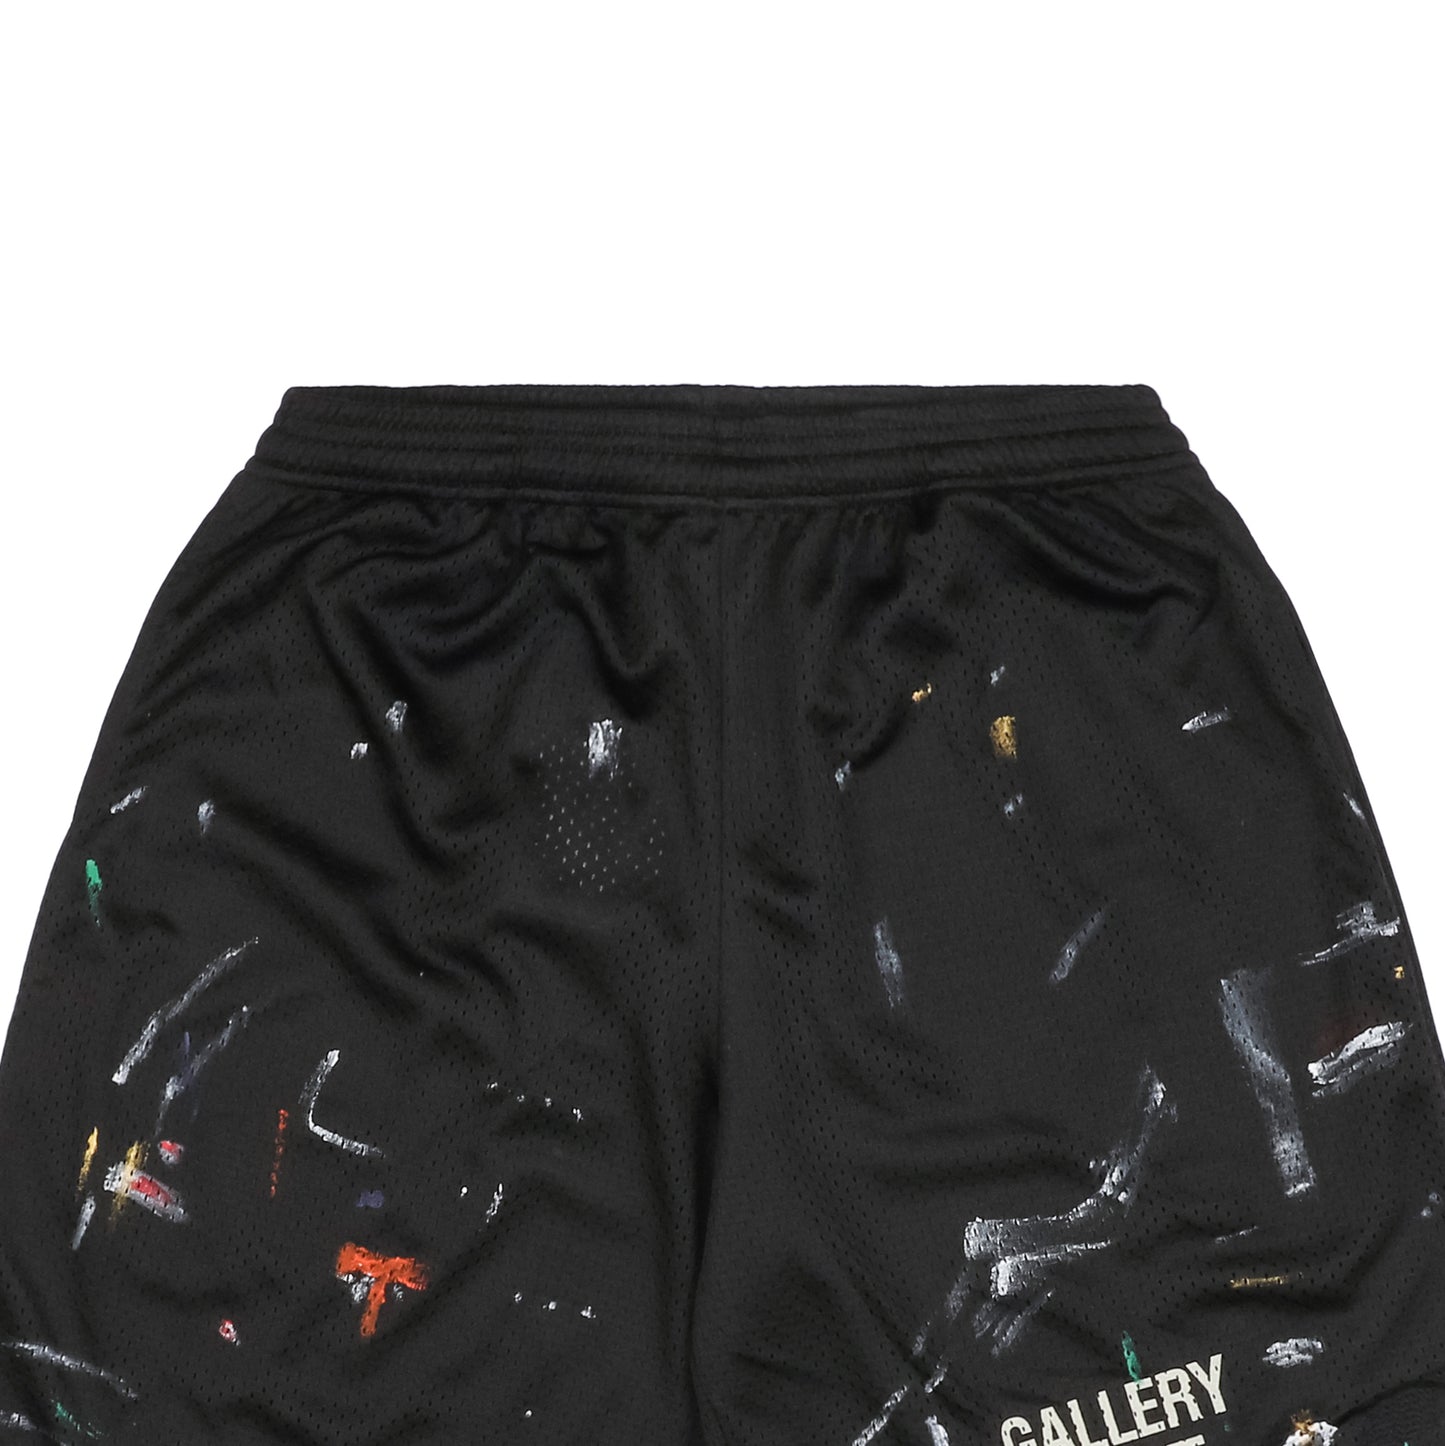 Gallery Dept Paint Splashed Black Shorts